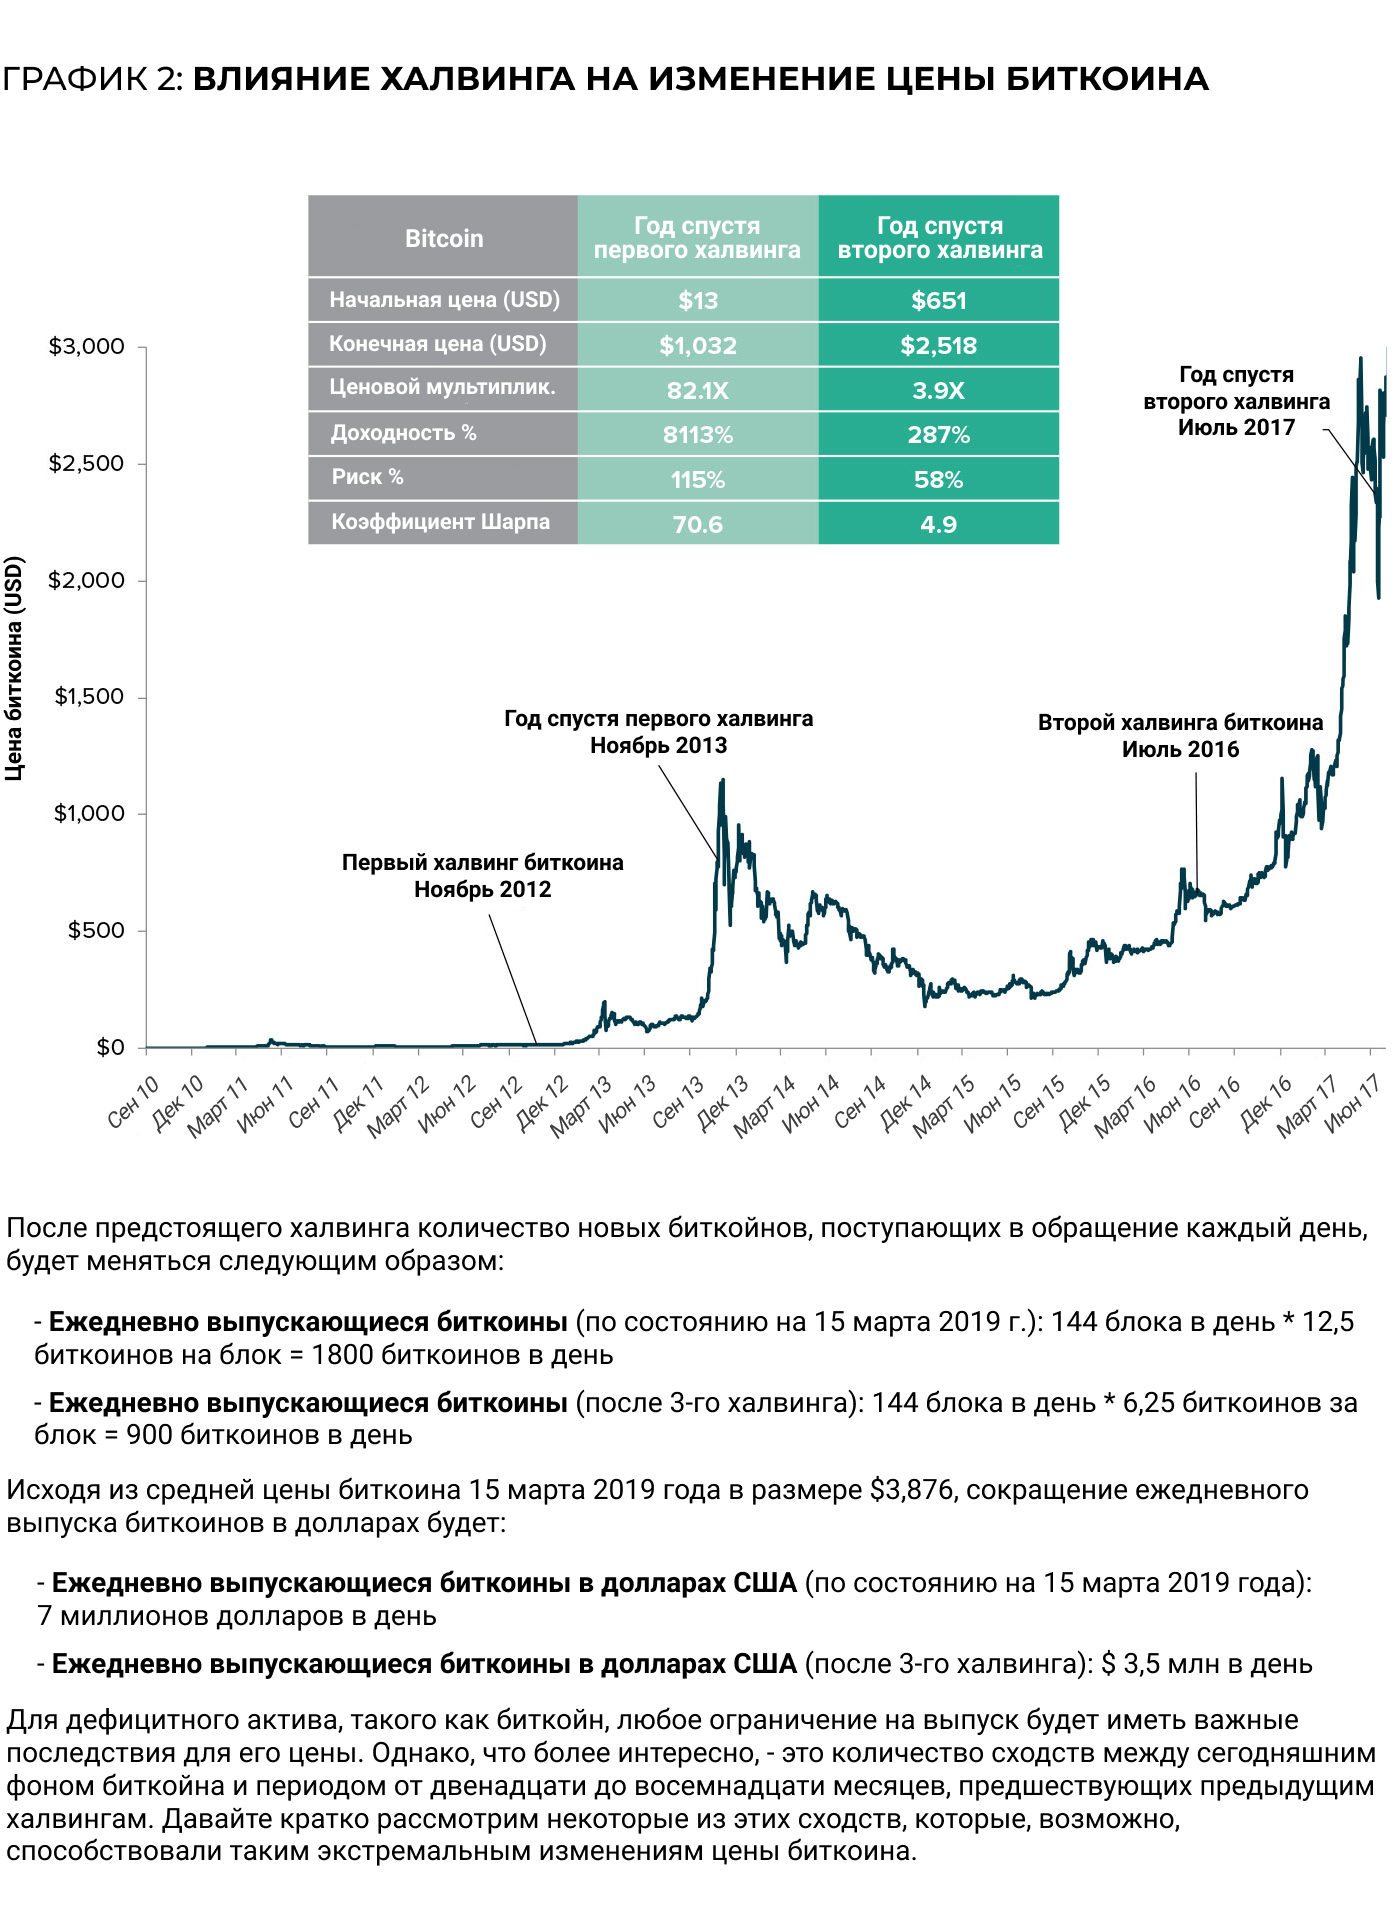 Bitcoin сколько доллар. Халвинги биткоина на графике. График халвинга биткойна. Халвинг BTC. Халвинг биткоина по годам.